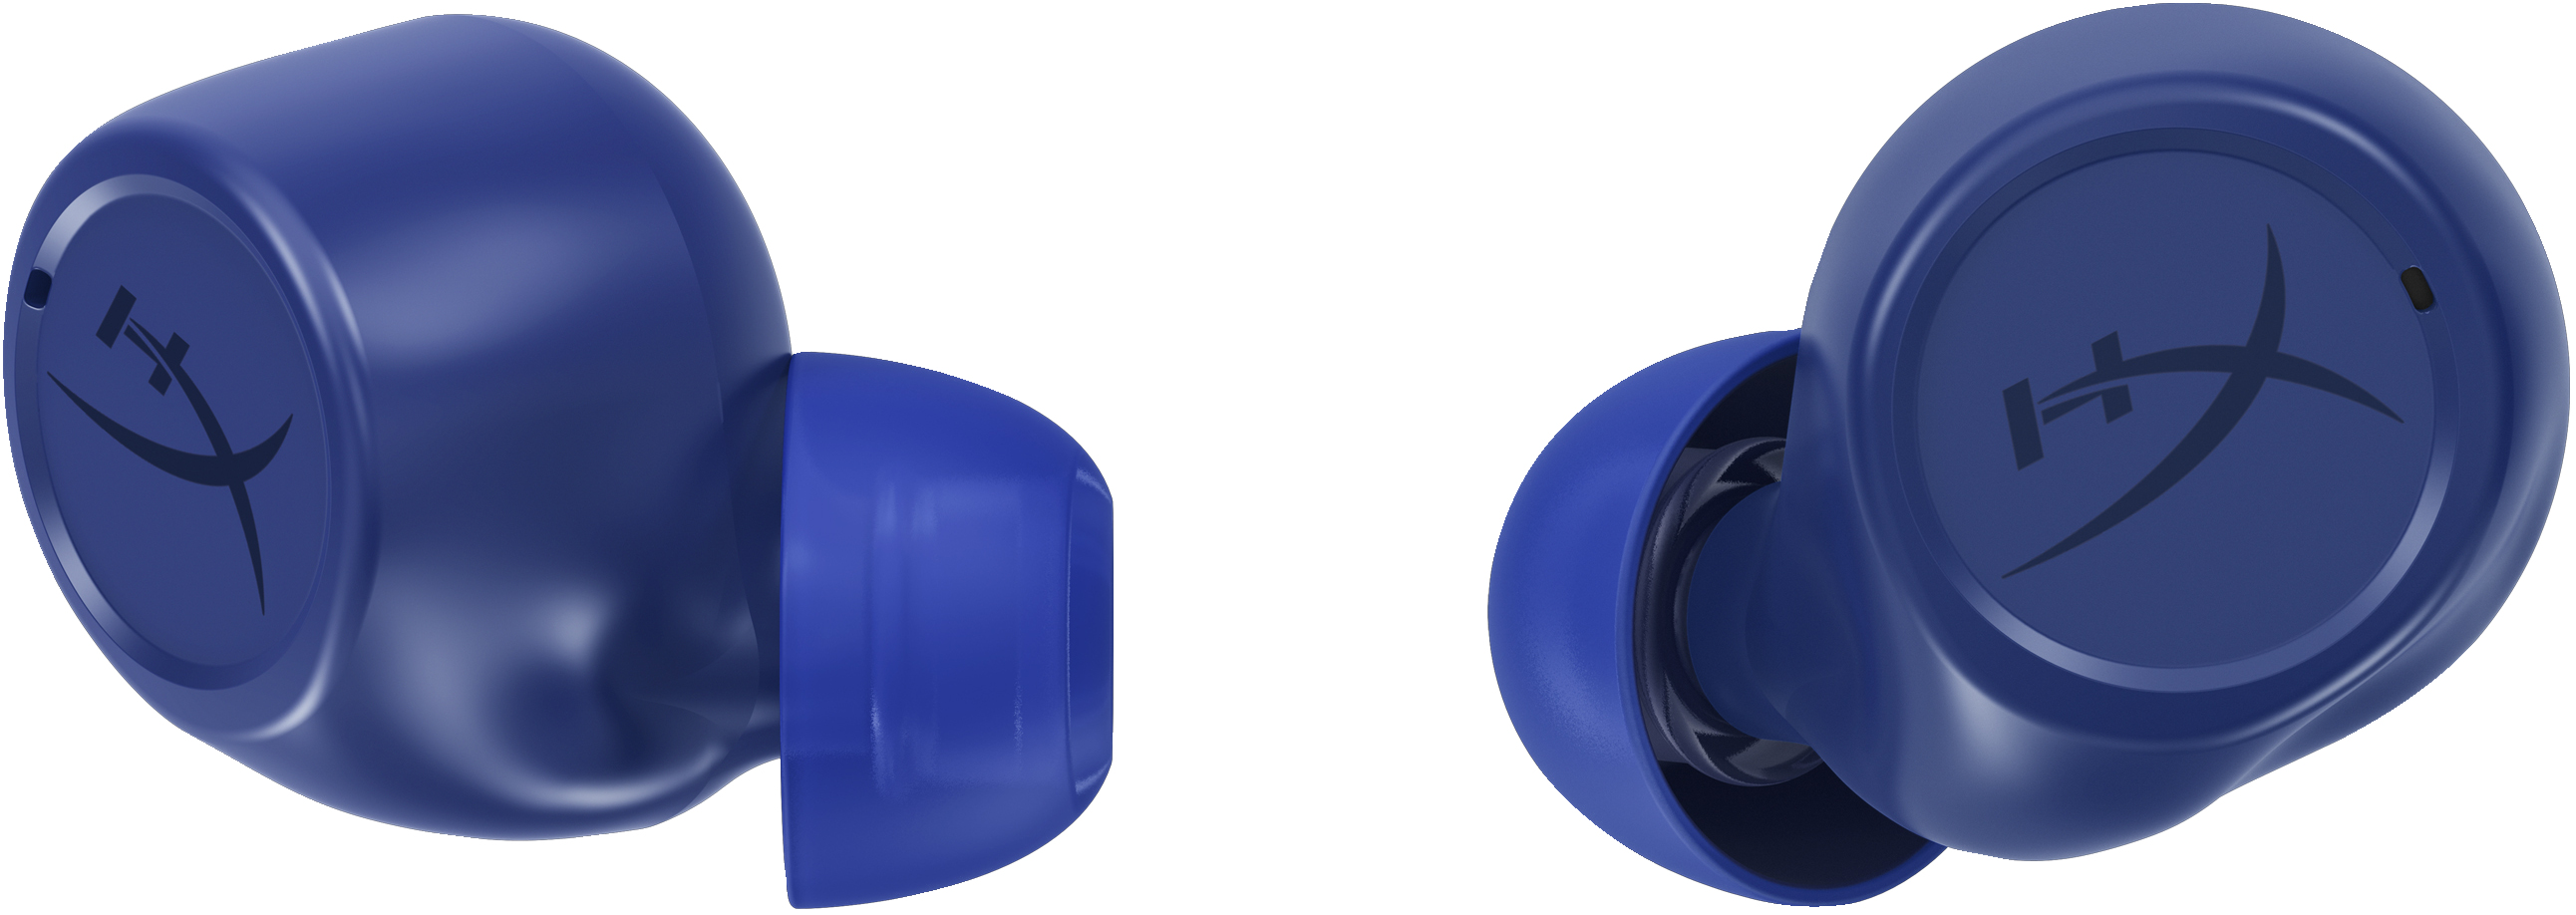 Blau Pro, In-Ear Cirro Buds Kopfhörer Bluetooth HYPERX In-ear